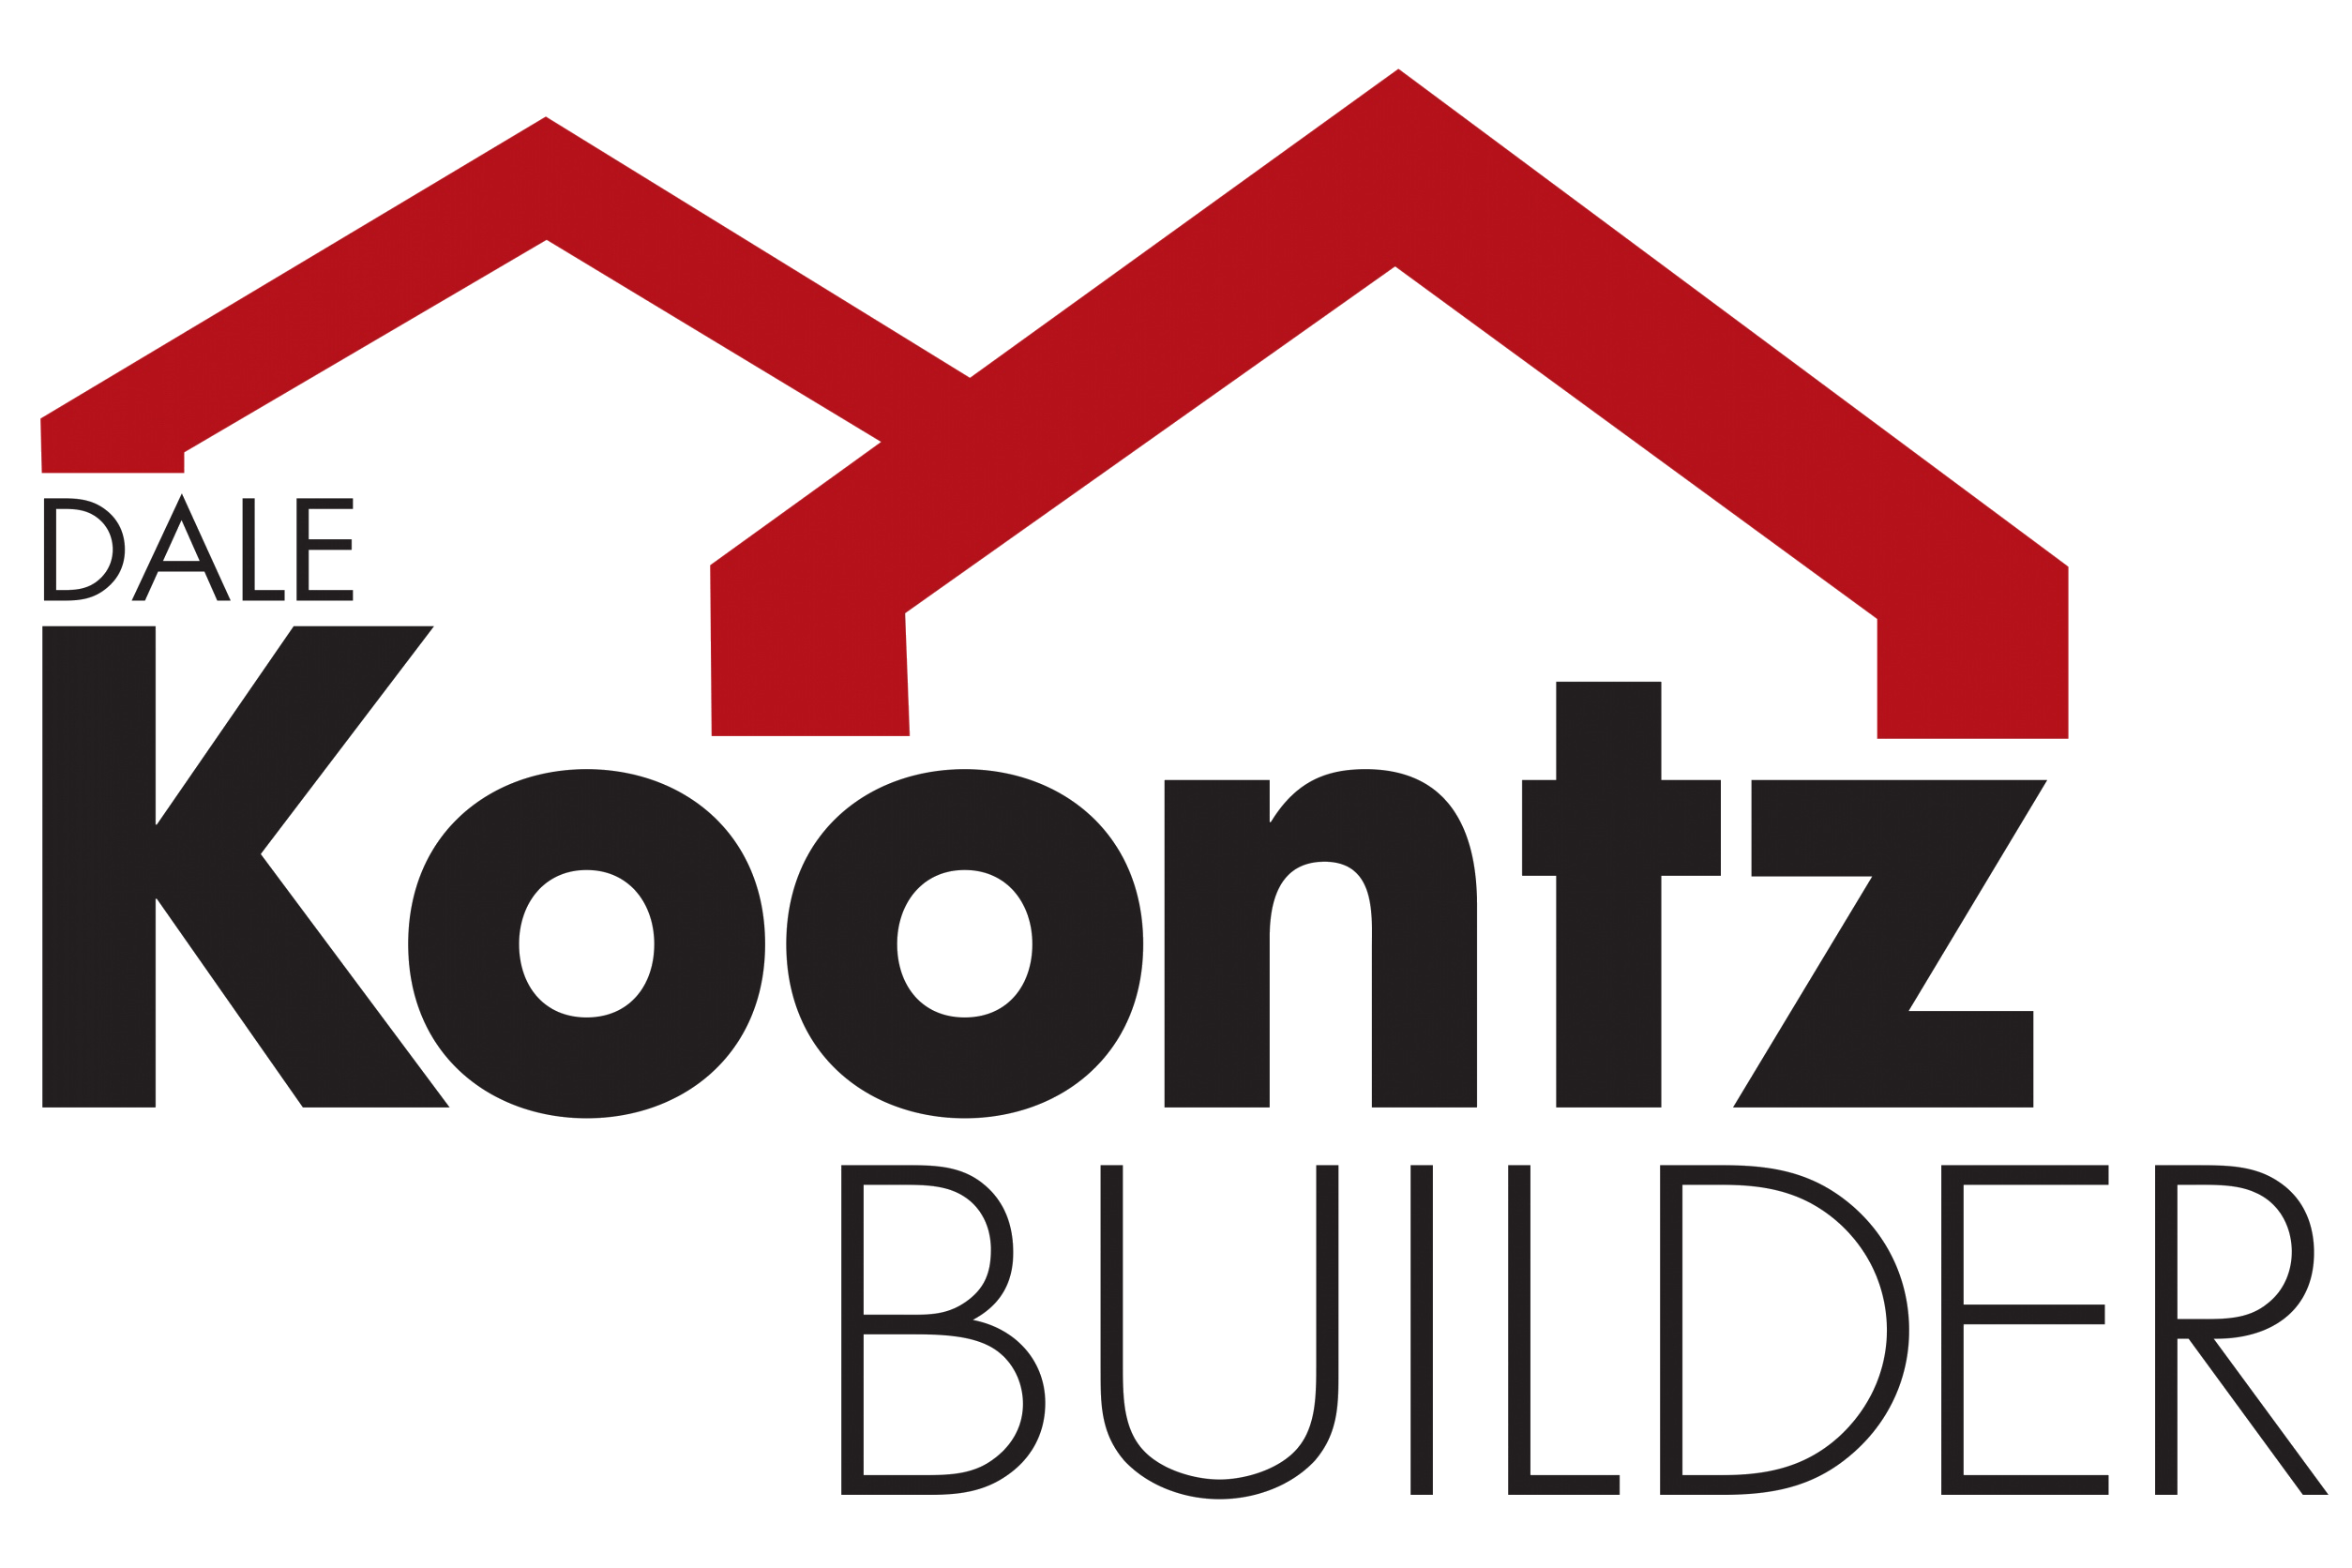 Dale Koontz-Builder-logo_clipped_rev_1